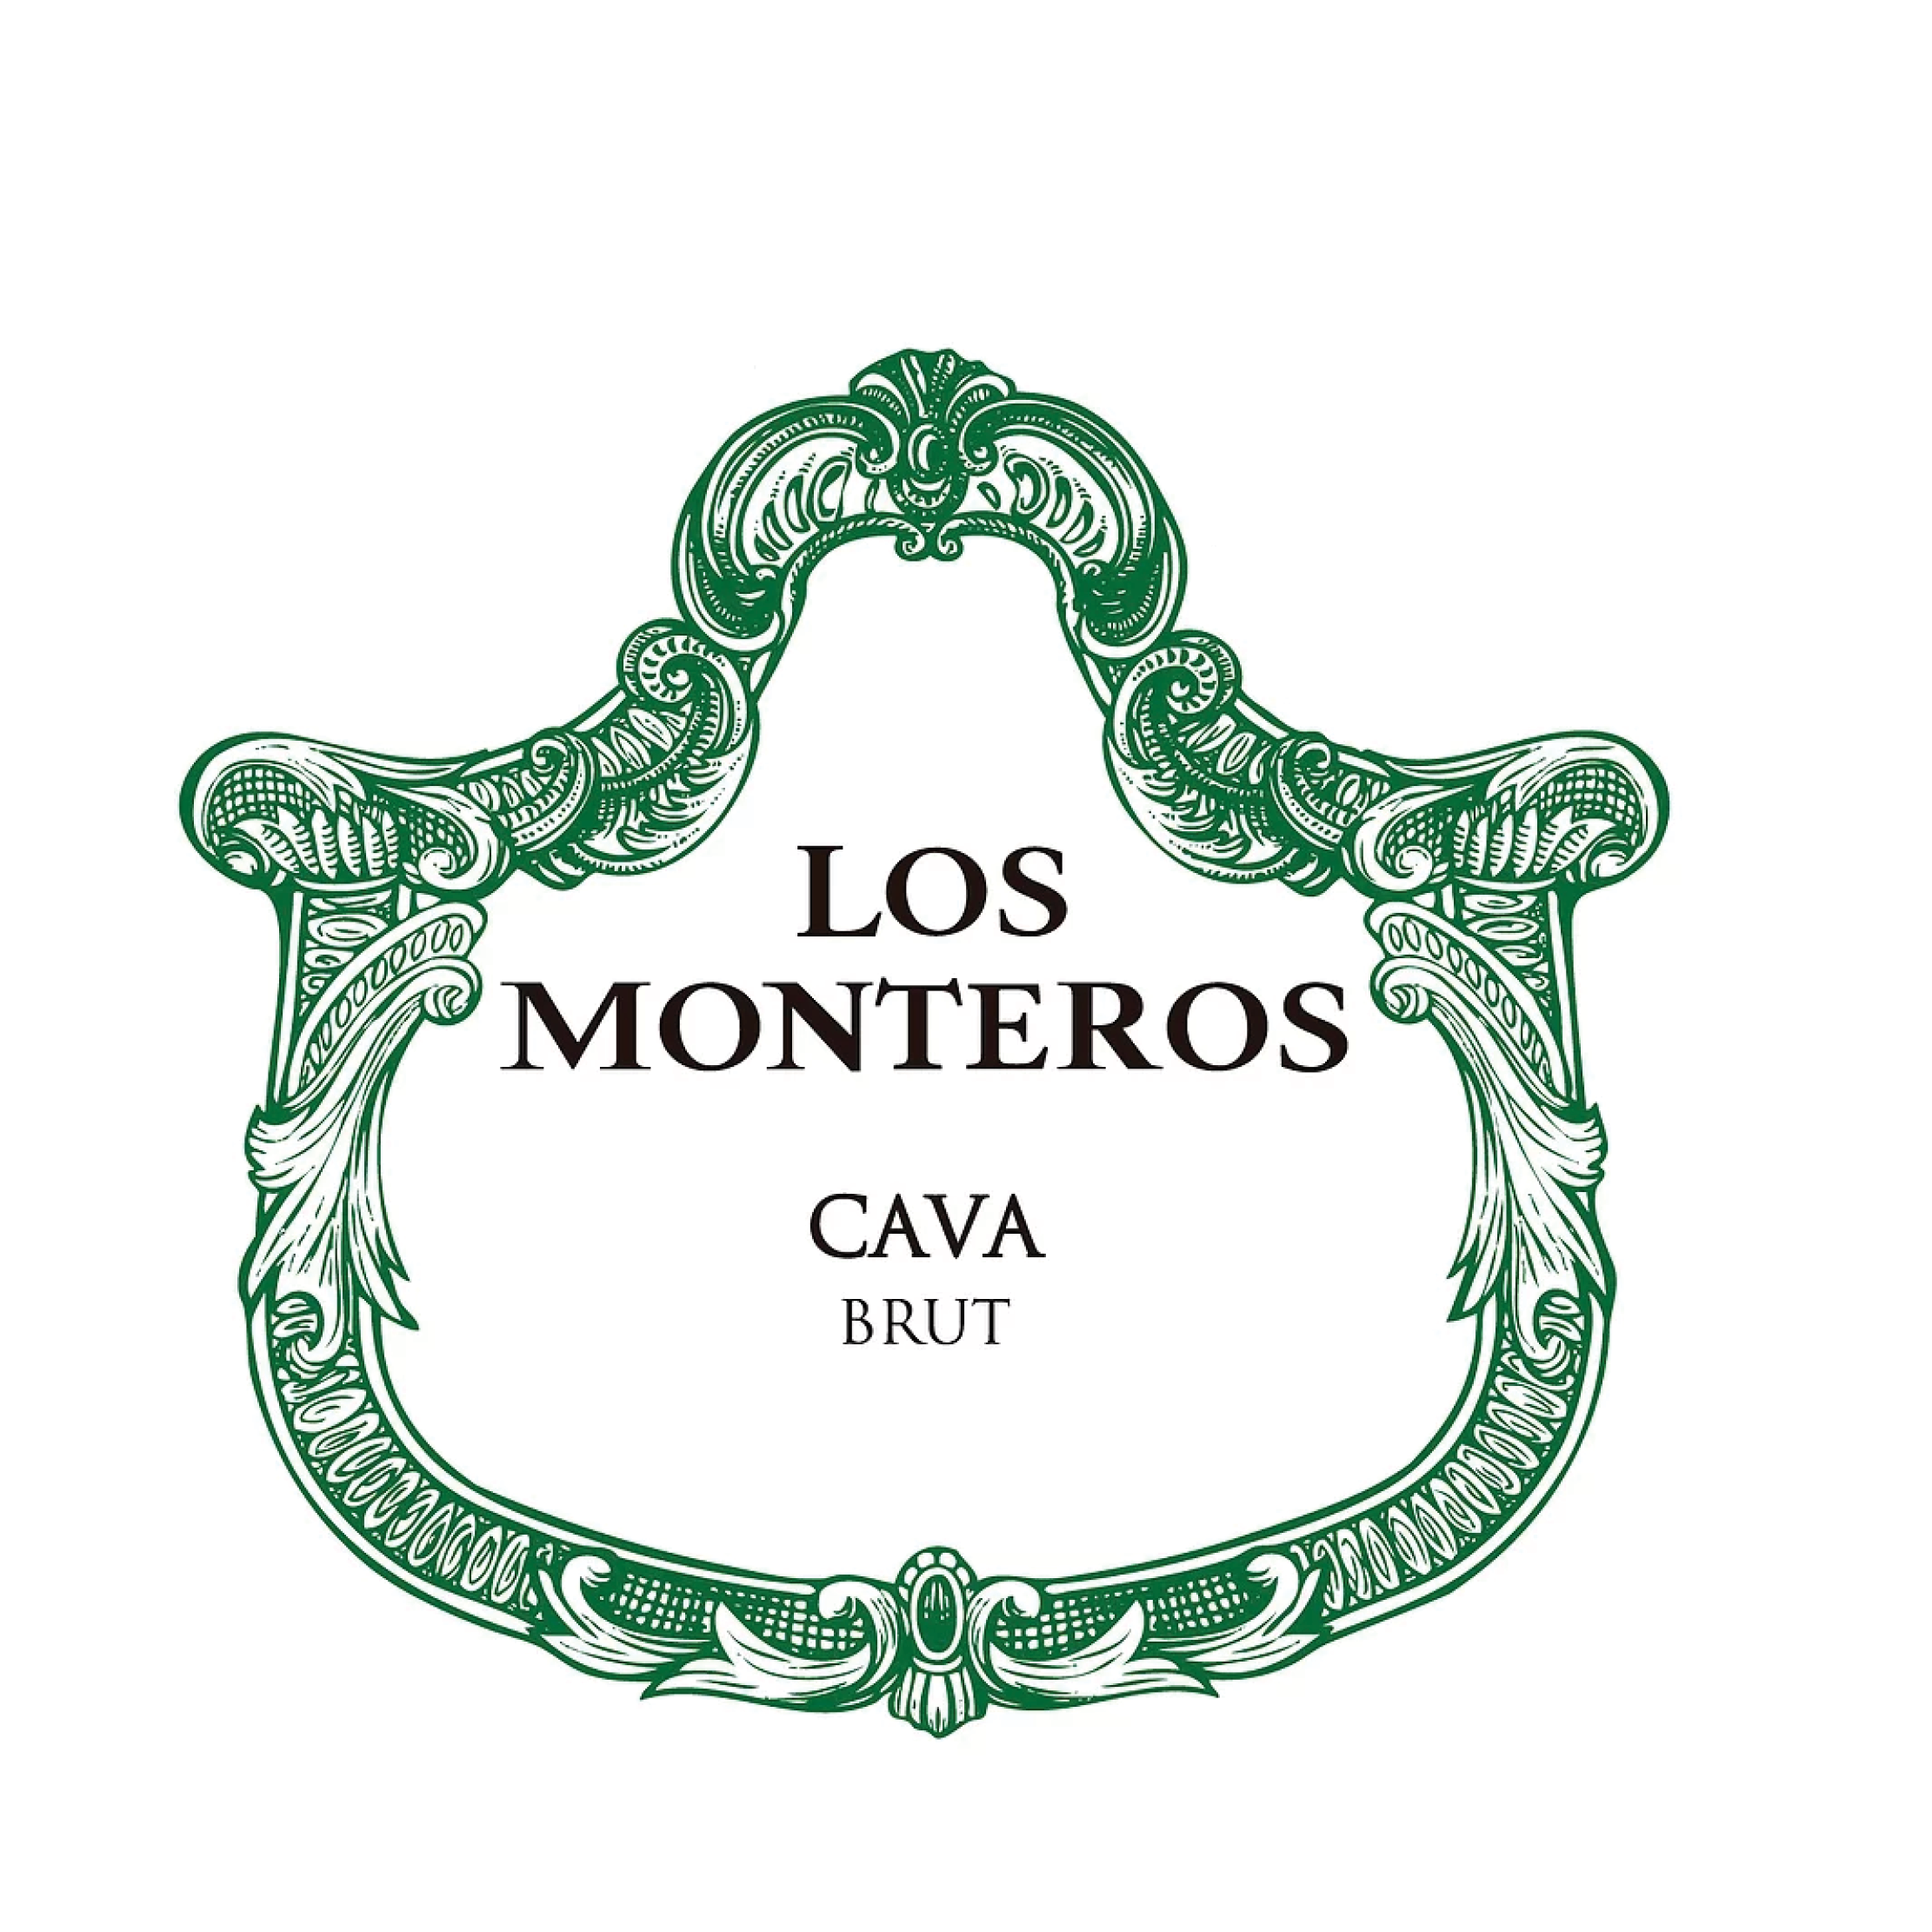 Los Monteros Cava Brut | Proud sponsors of the Decatur Arts Festival